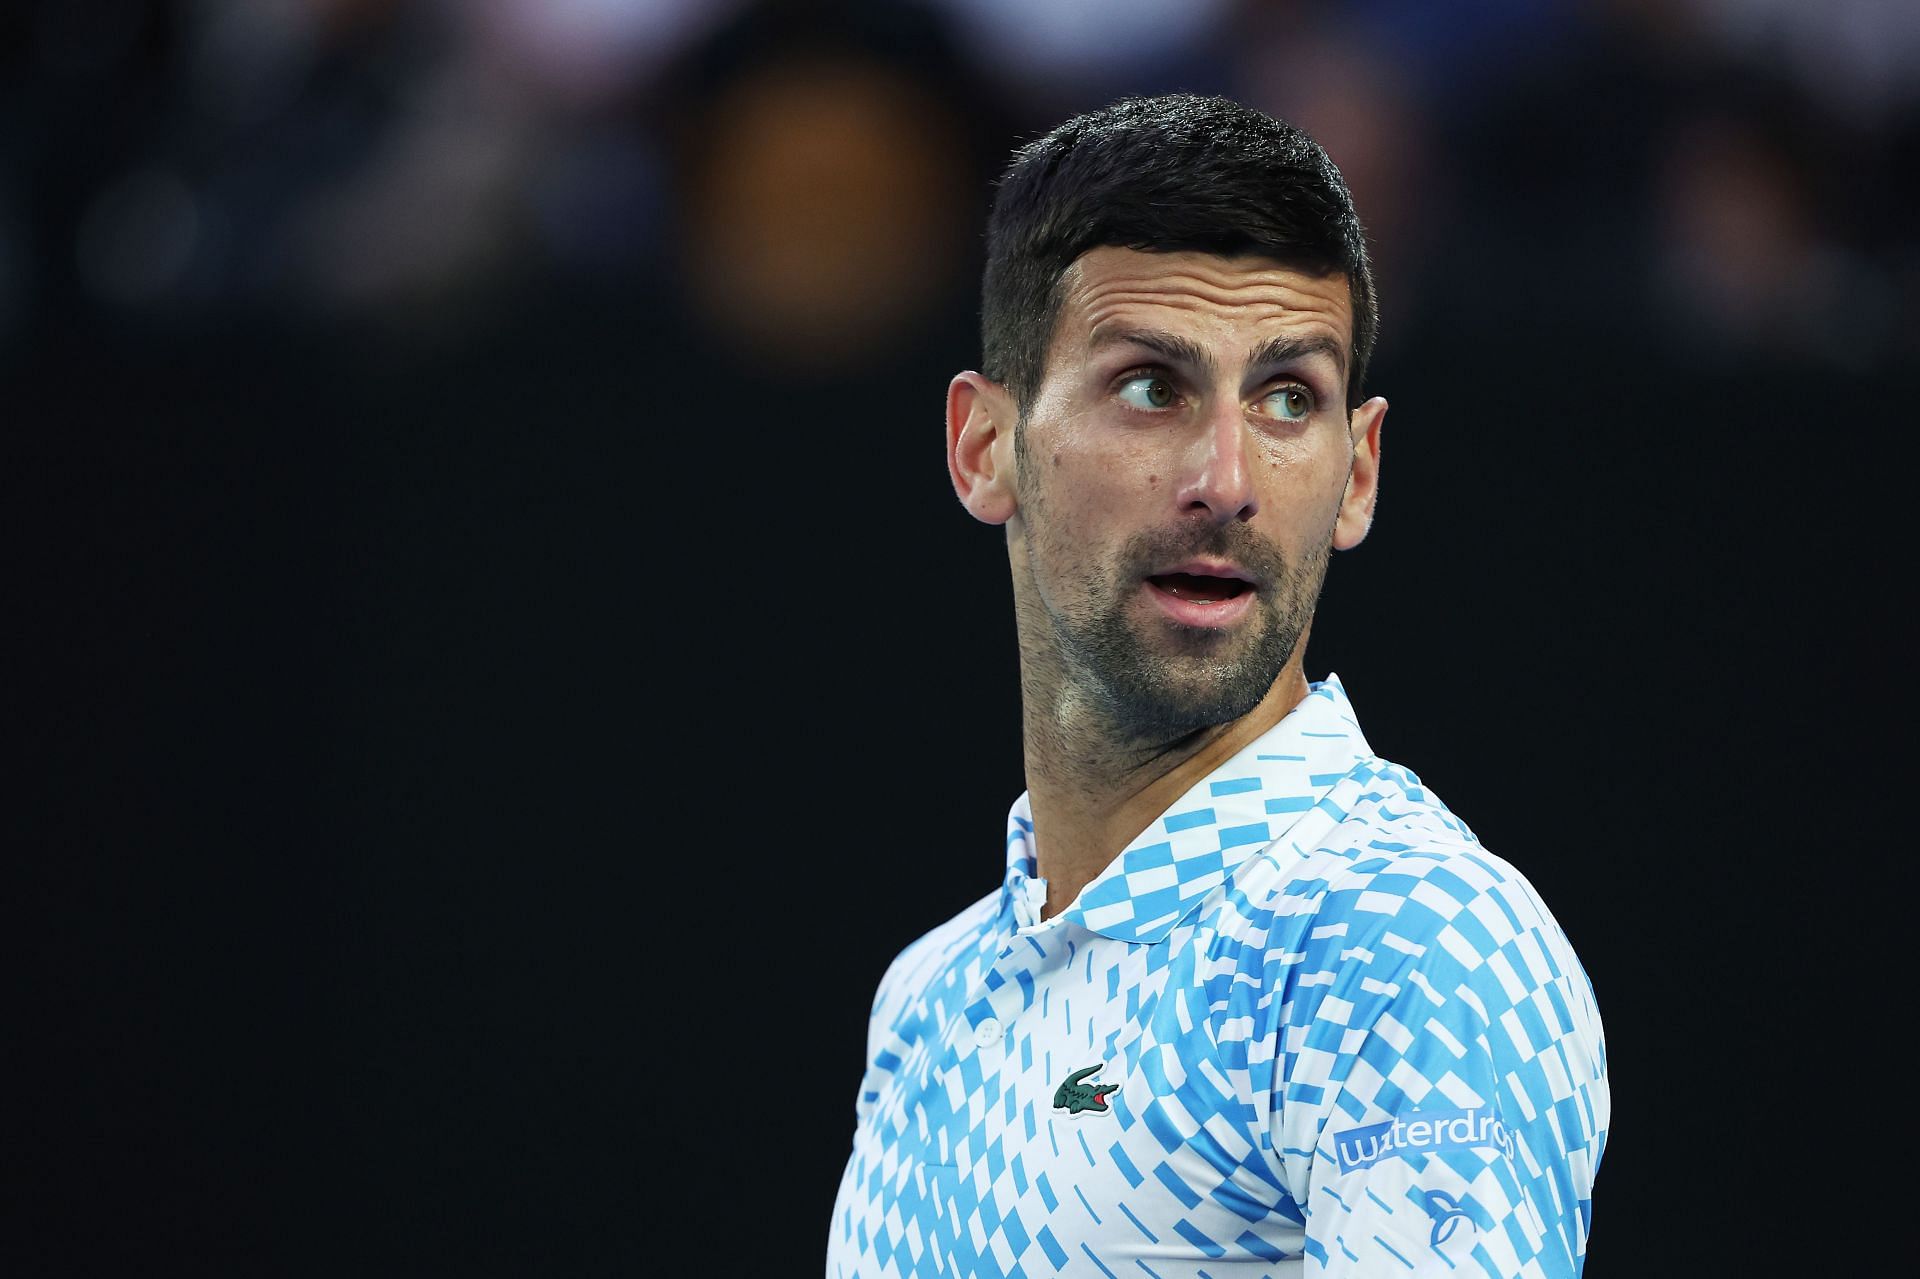 Novak Djokovic pictured at the 2023 Australian Open - Day 4